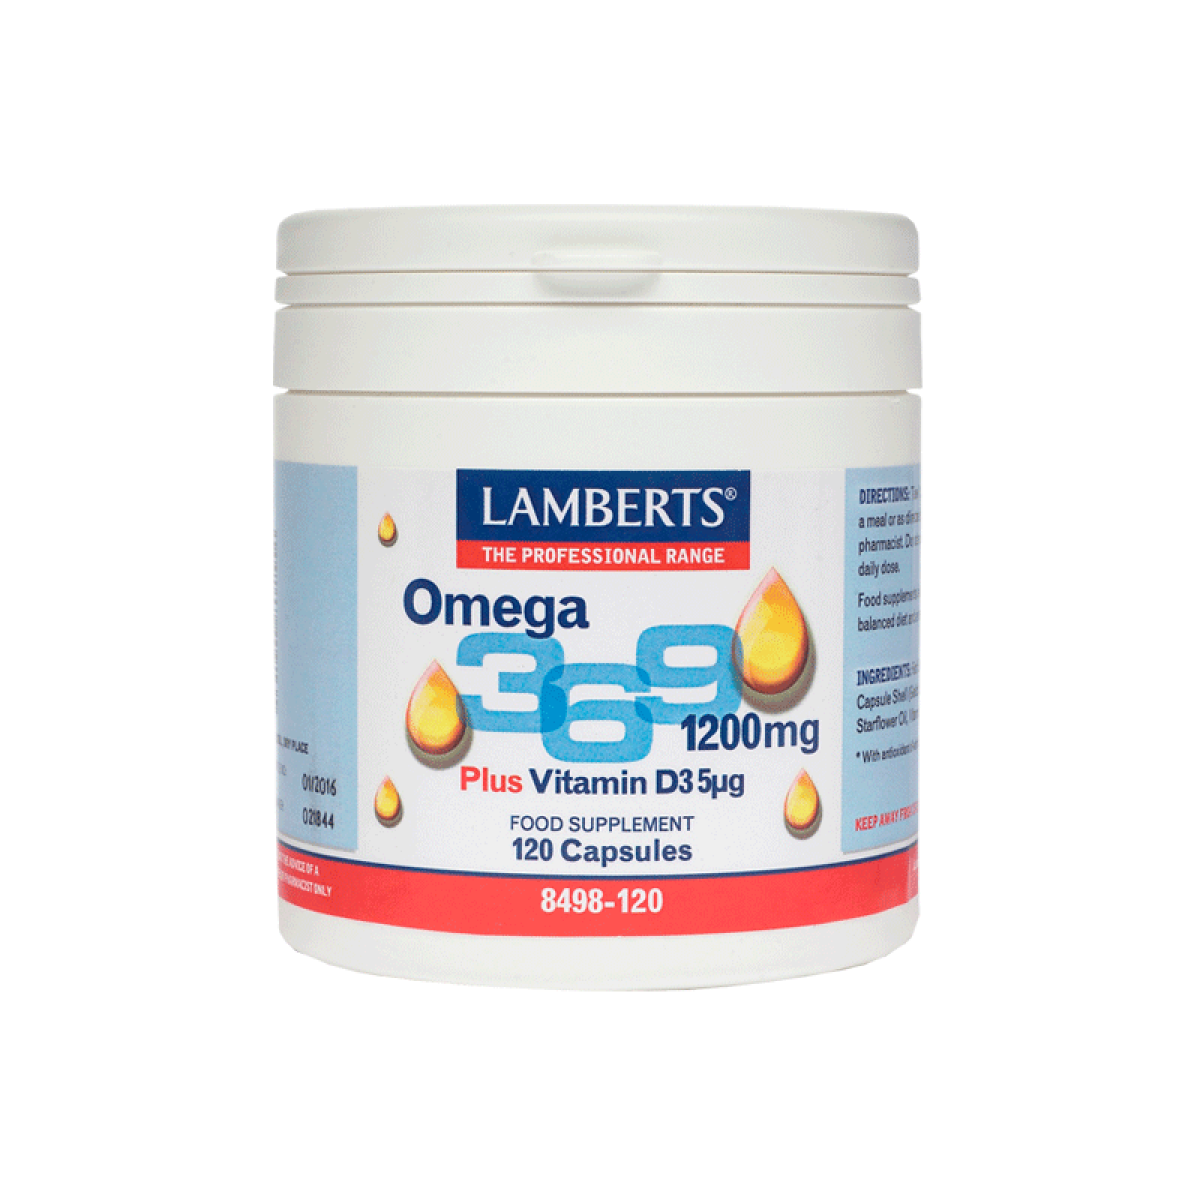 Lamberts | Omega 369,1200mg plus Vitamin D3 | 120caps